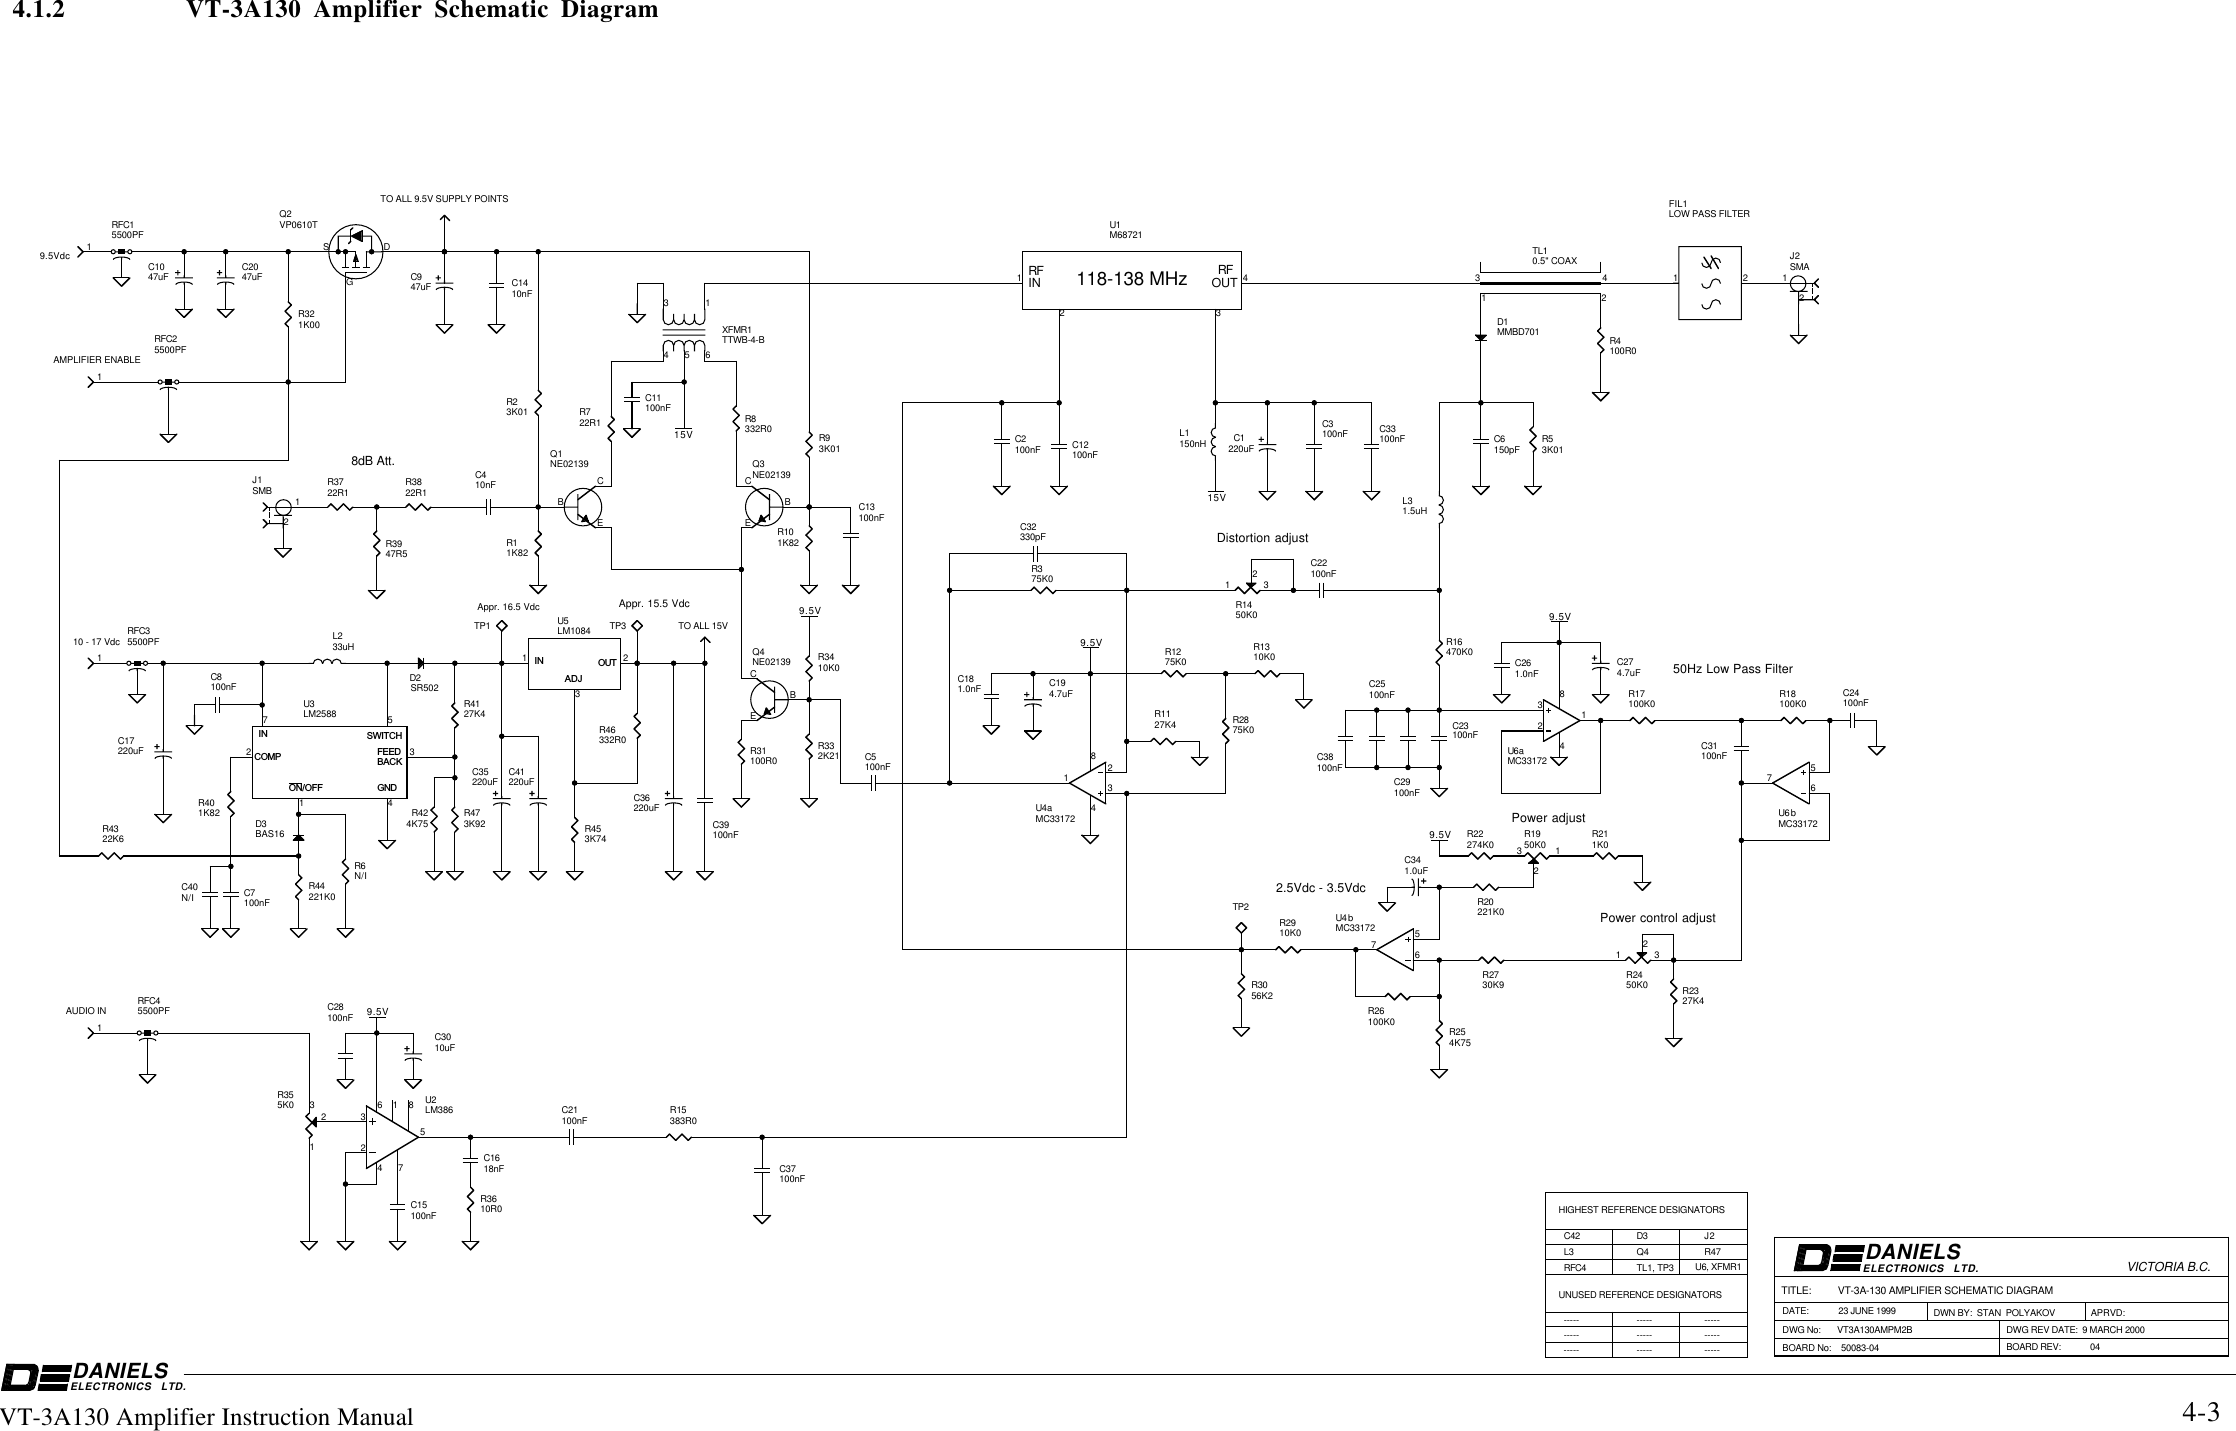 VICTORIA B.C.ELECTRONICS LTD.DANIELSELECTRONICS LTD.DANIELSAppr. 15.5 VdcAppr. 16.5 VdcTITLE:          VT-3A-130 AMPLIFIER SCHEMATIC DIAGRAMDWG No:       VT3A130AMPM2B4-3VT-3A130 Amplifier Instruction Manual4.1.2          VT-3A130 Amplifier Schematic DiagramDWG REV DATE:  9 MARCH 2000C42R47---------- ----- -----TL1, TP3D3BOARD No:    50083-04 BOARD REV:             04L38dB Att.DATE:             23 JUNE 1999U6, XFMR1RFC4Q4J2 DWN BY:  STAN  POLYAKOVPower control adjust2.5Vdc - 3.5VdcPower adjustDistortion adjust50Hz Low Pass FilterAPRVD:HIGHEST REFERENCE DESIGNATORSUNUSED REFERENCE DESIGNATORS-------------------------D1MMBD701C6150pF19.5VdcRFC15500PFRFC25500PF1AMPLIFIER ENABLEC13100nFRFC35500PF110 - 17 Vdc43218U4MC33172a9.5VC181.0nF C194.7uF75K0R1212350K0R1475K0R383214U6MC33172aR17100K0657U6MC33172b657U4MC33172bR16470K09.5VC261.0nF C274.7uF12350K0R24R26100K0RFC45500PF1AUDIO INC25100nF12SMAJ2L31.5uH9.5V75K0R28TP2R254K75R211K0R22274K0R2327K4R2910K0R3056K2C410nFGDSQ2VP0610T12FIL1LOW PASS FILTEREBCQ1NE02139EBCQ3NE02139R11K82R23K01 R722R1R93K01R101K82R31100R0R332K21R3410K0EBCQ4NE021399.5V47uFC10 47uFC20C11100nF12SMBJ1TO ALL 9.5V SUPPLY POINTS47uFC9100nFC3L1150nH10nFC14R1127K412345678LM386U21235K0R35100nFC159.5V18nFC1610R0R36100nFC2810uFC30C21100nF118-138 MHzRF RFOUTIN2314M68721U113645XFMR1TTWB-4-B1234TL10.5&quot; COAX12350K0R19332R0R8330pFC3210K0R1330K9R27100nFC12100nFC2100nFC5R18100K0C31100nFC23100nFC29100nFC22100nF22R1R37 22R1R38R3947R515VSR502D2383R0R15C37100nFC38100nF100R0R43K01R5GNDFEEDBACKCOMPIN SWITCHON/OFF243751LM2588U3100nFC8D3BAS1615VN/IR633uHL2ADJOUTIN321LM1084U5 TO ALL 15V 220uFC35220uFC3627K4R41TP1 TP3220uFC17C39100nF100nFC71K82R40N/IC40220uFC41R46332R0100nFC33C24100nF3K74R45R20221K01.0uFC34R44221K0R4322K64K75R42 3K92R47220uFC1R321K00